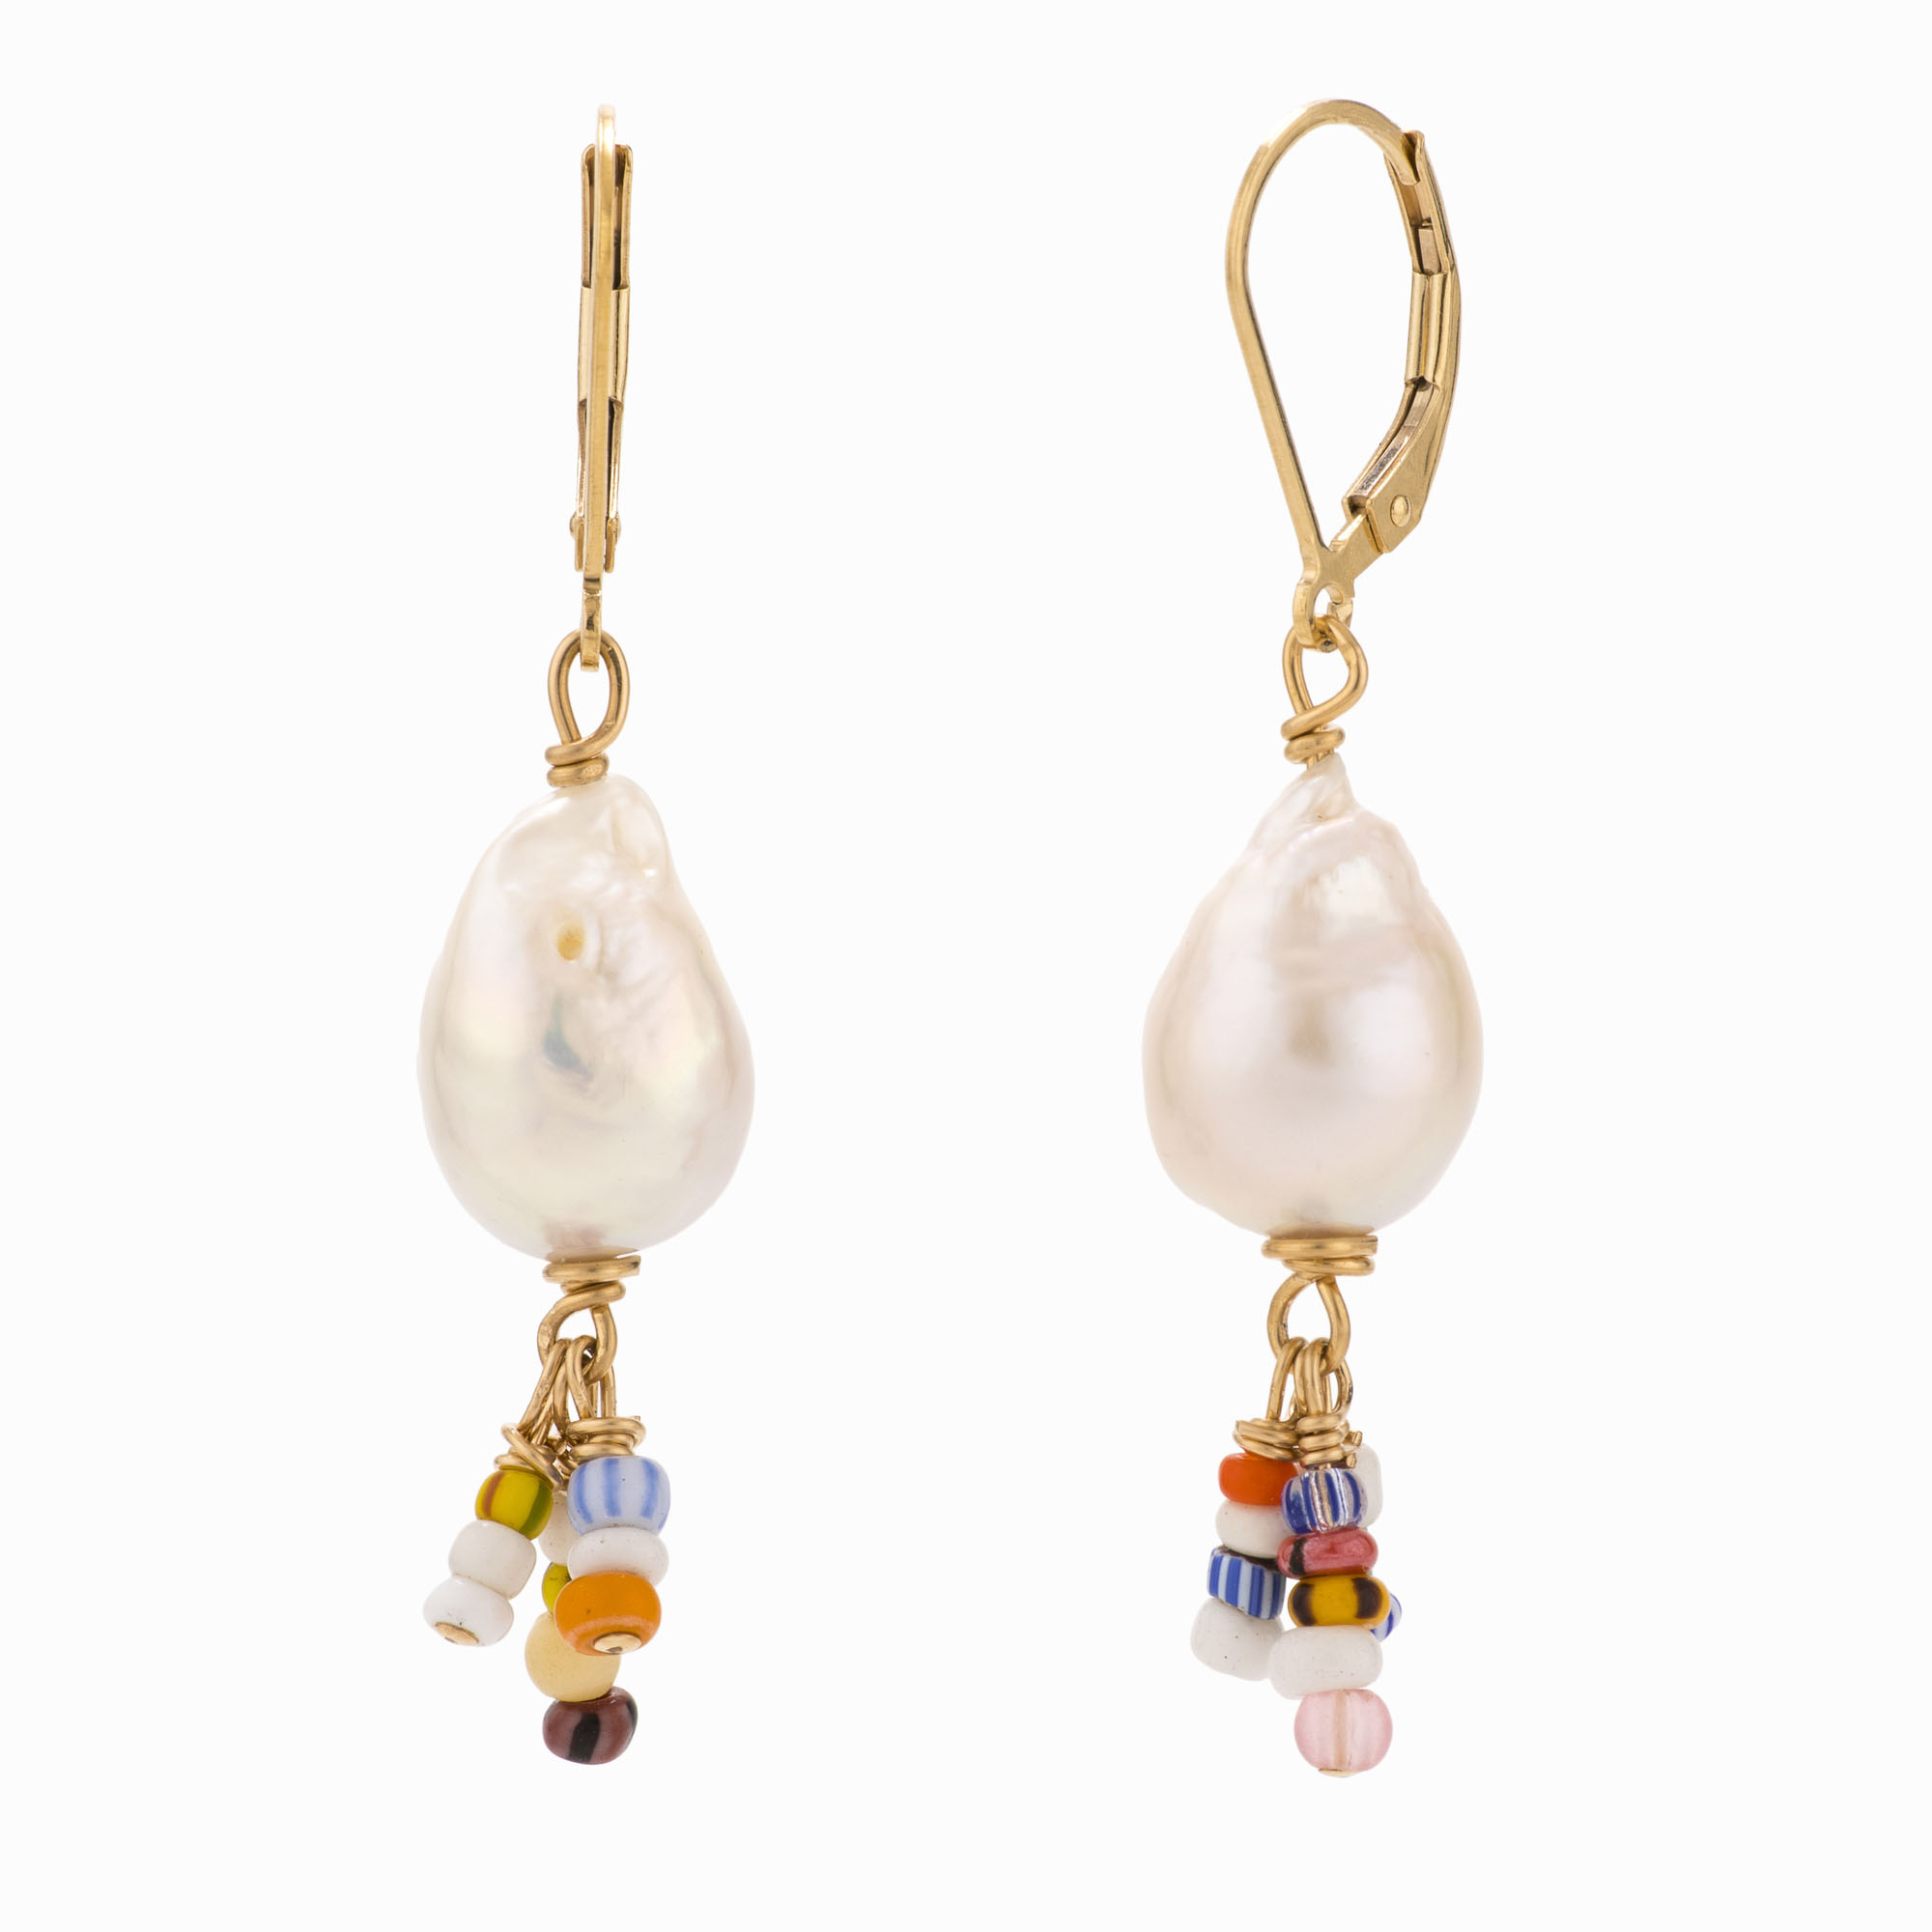 Featured image for “Elara Pearl Earrings”